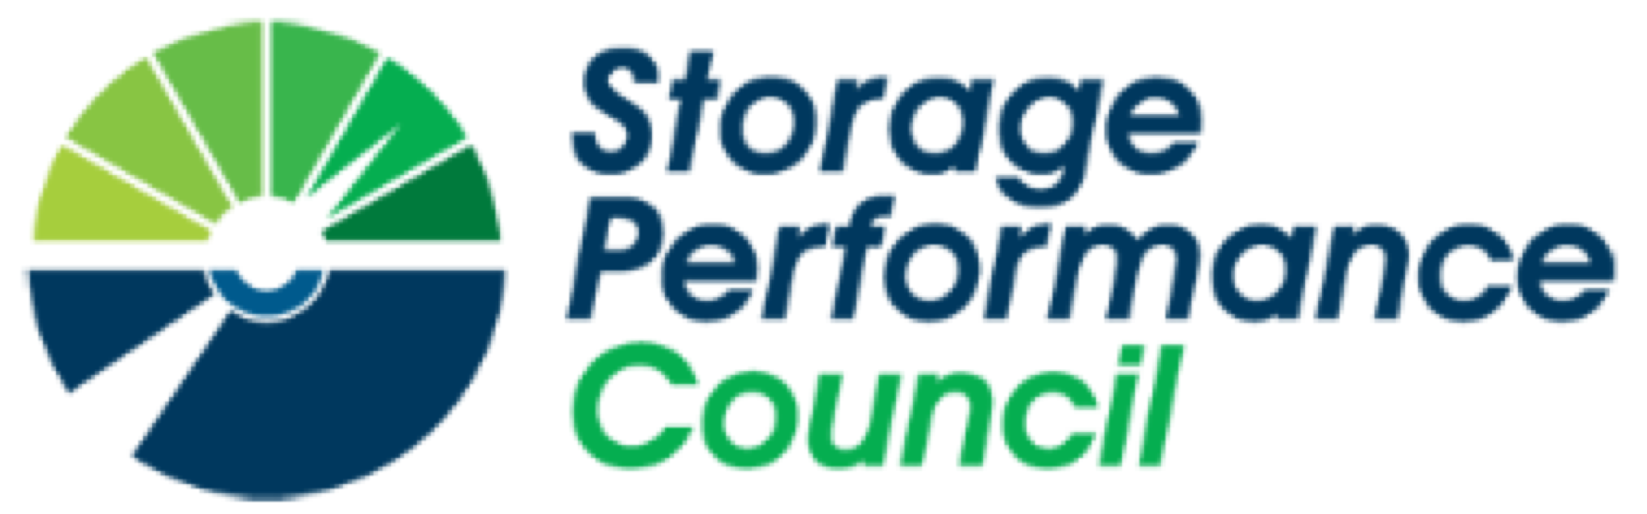 Storage Performance Council